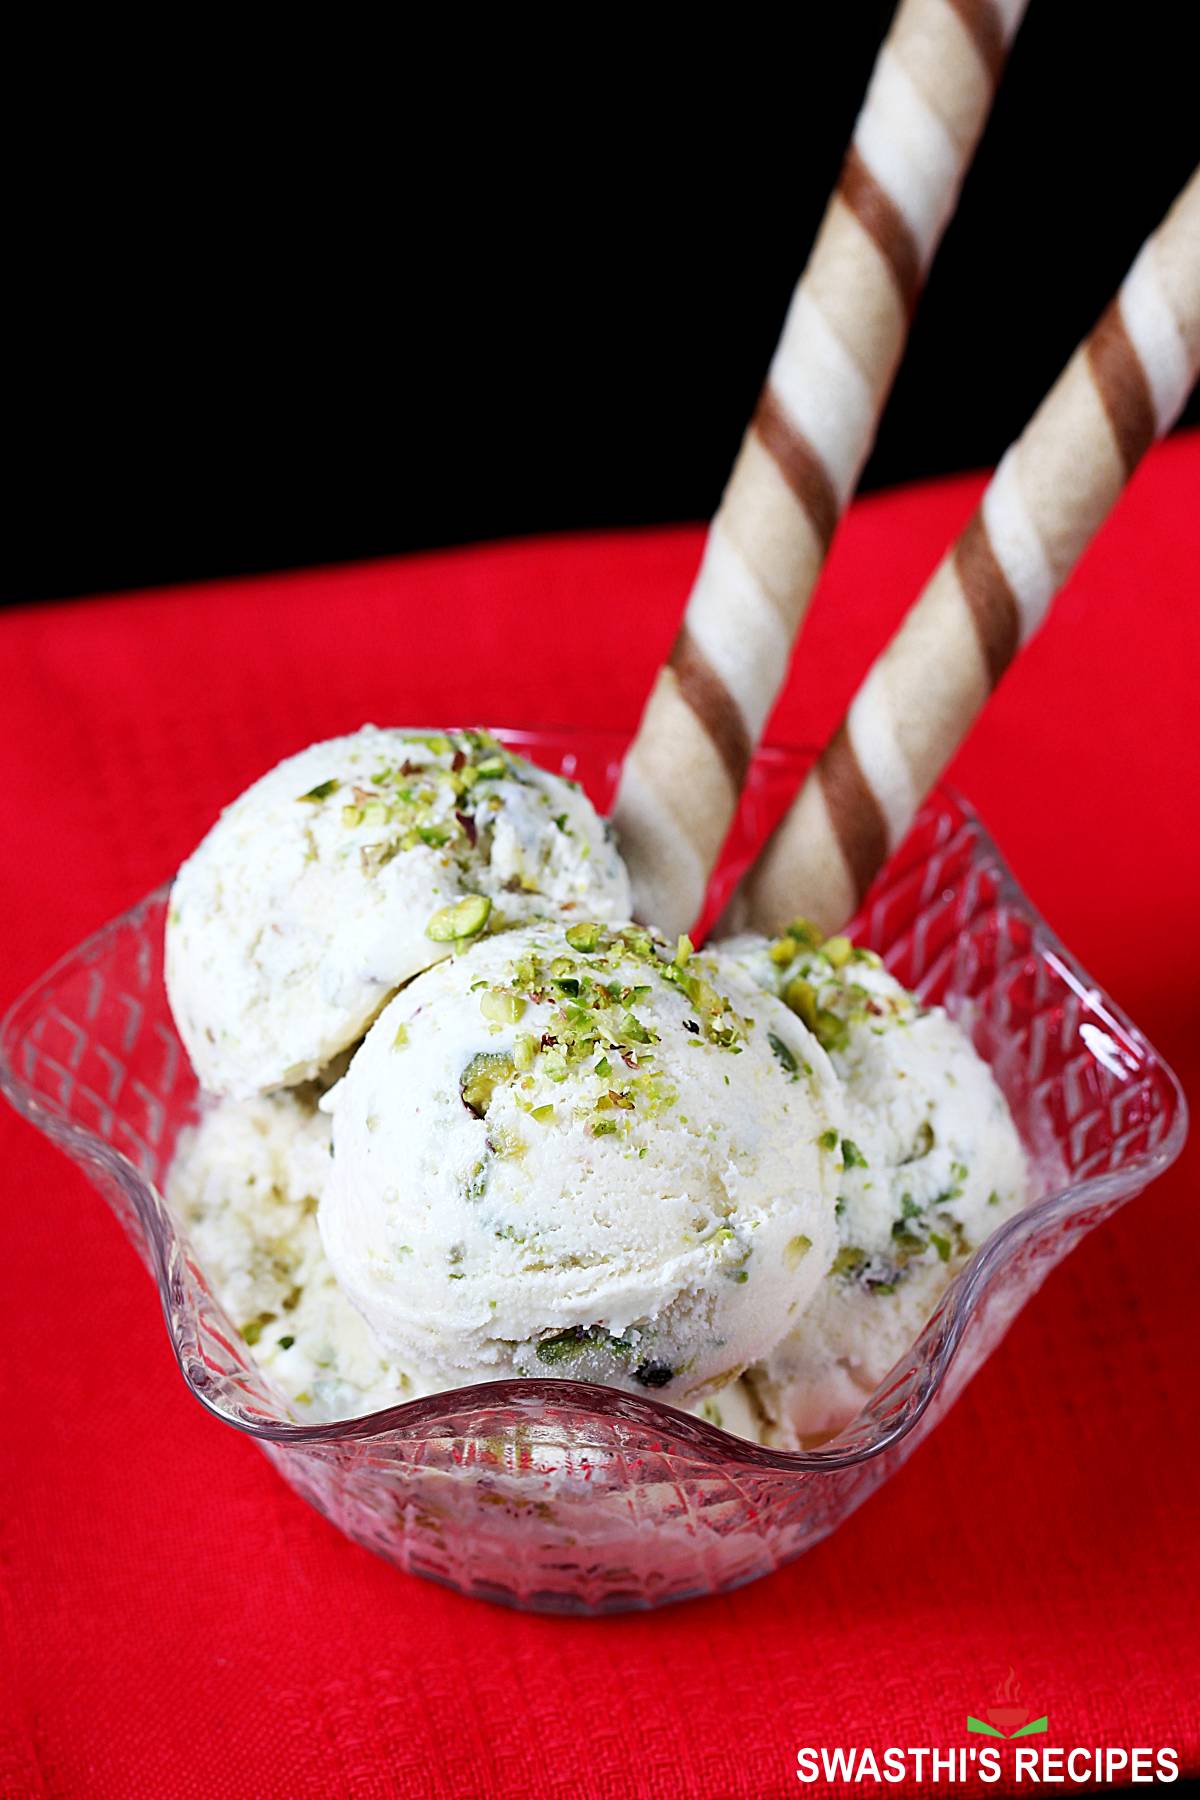 pistachio ice cream served in a bowl